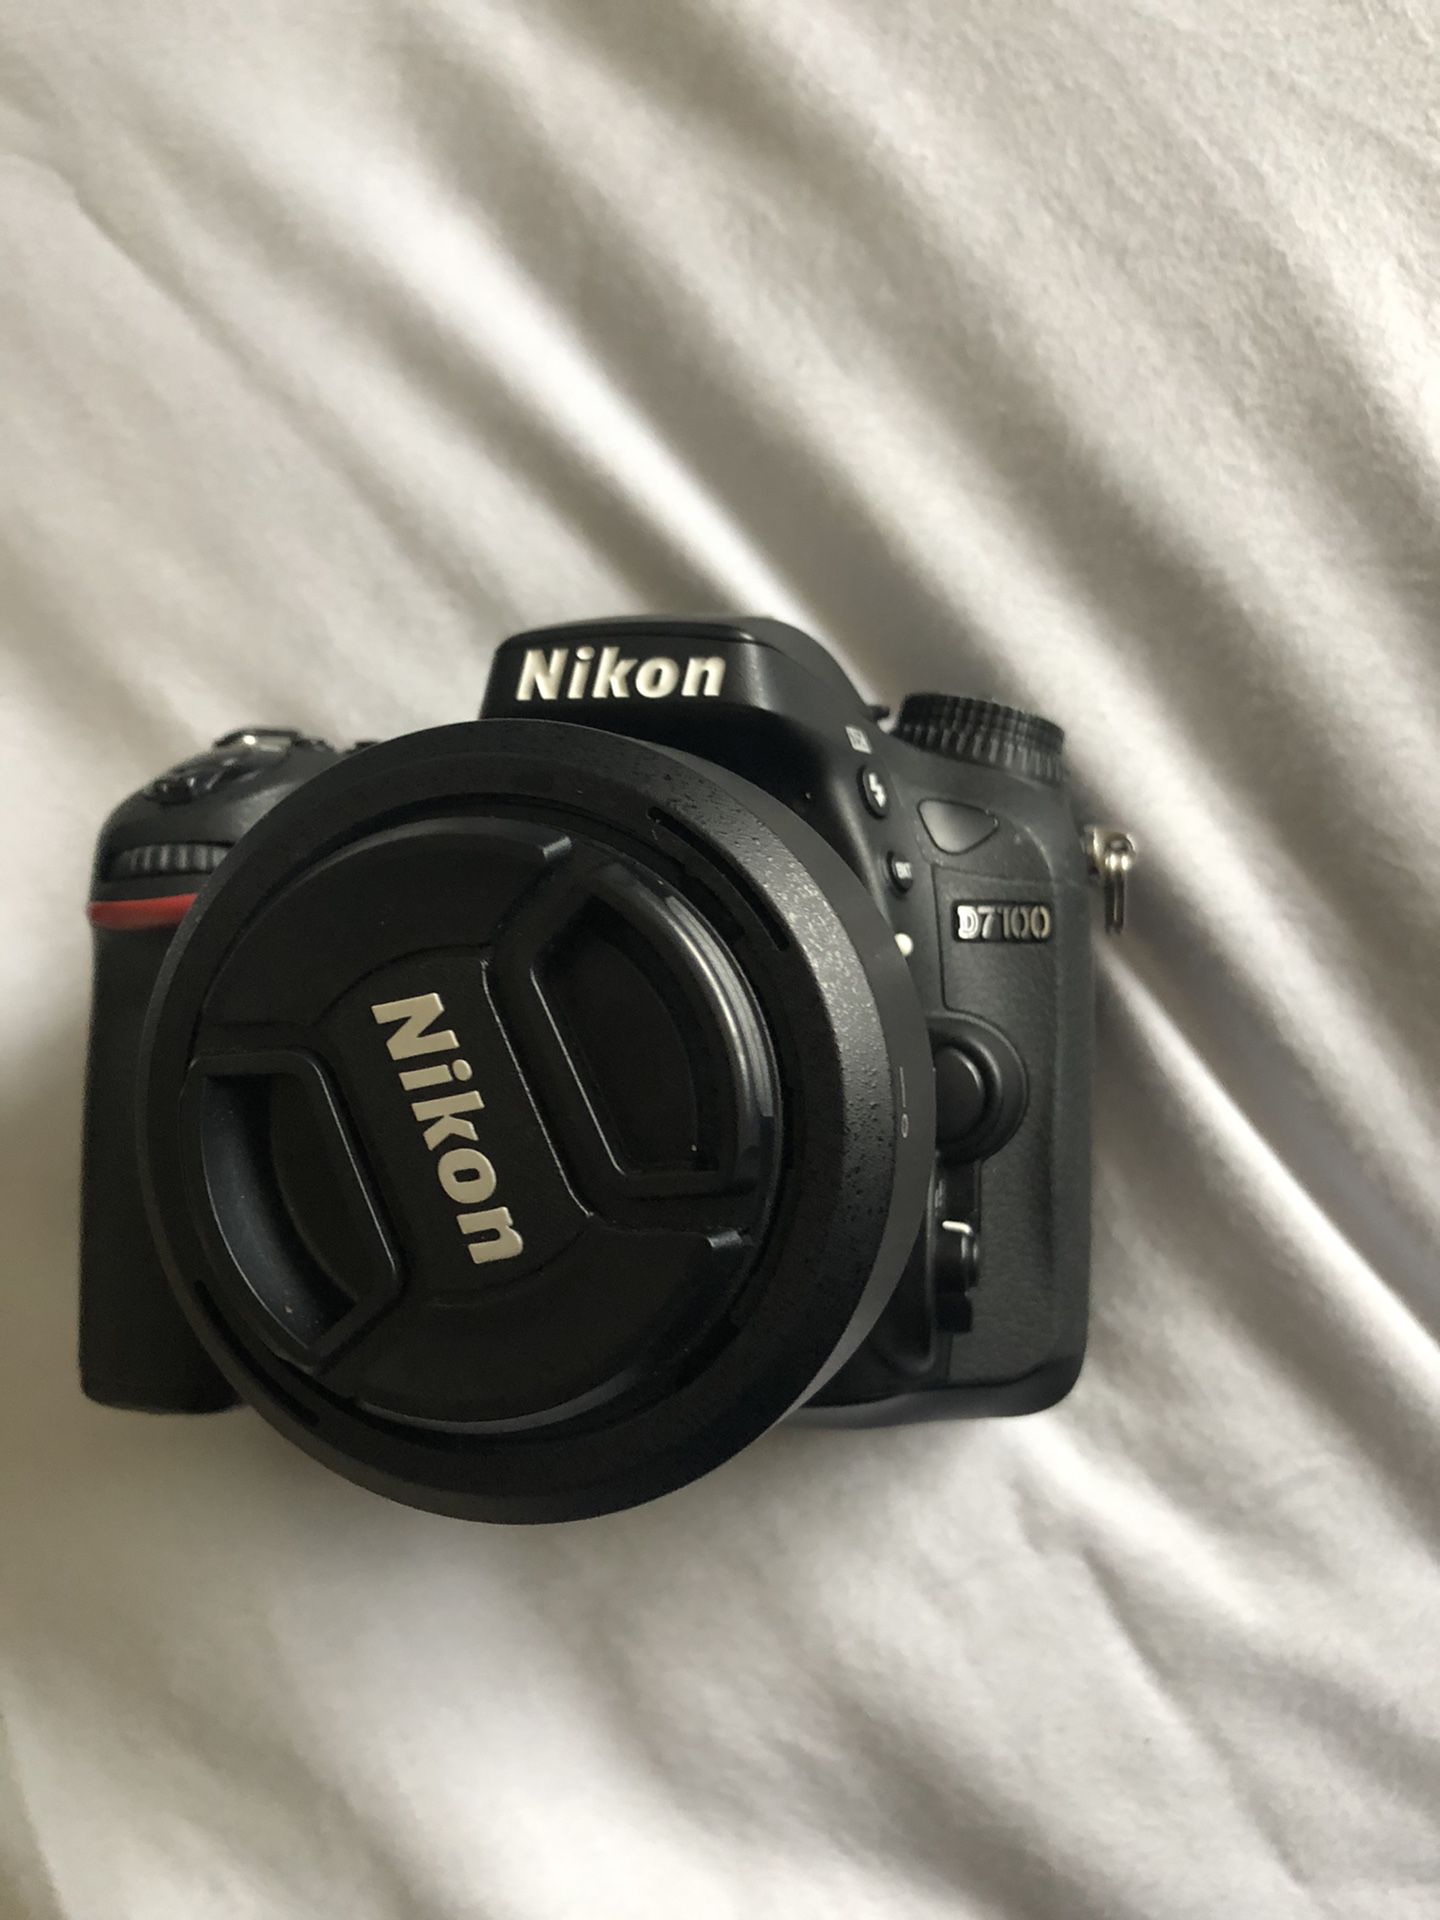 Nikon D7100 and lenses